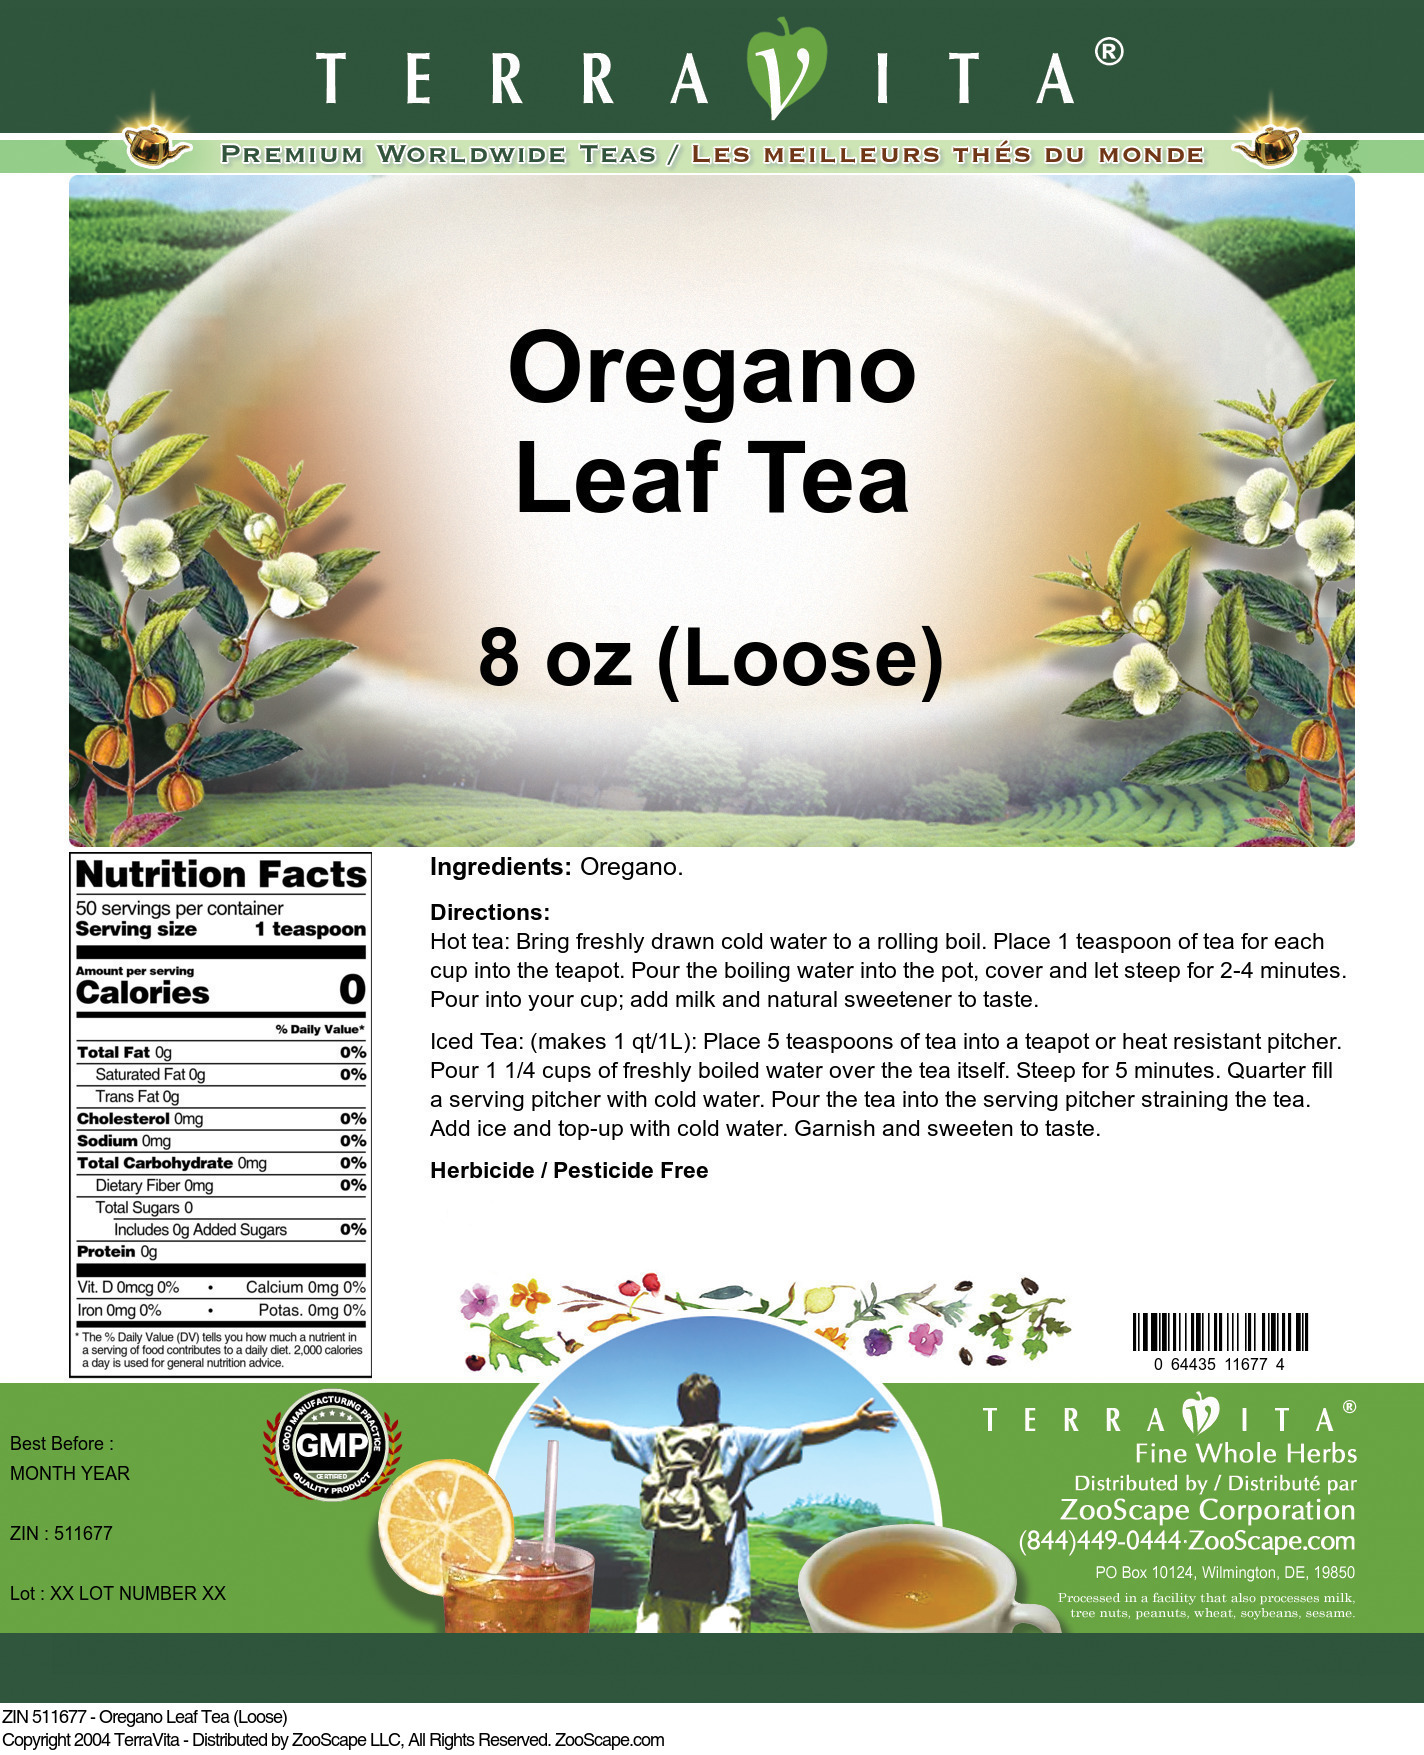 Oregano Leaf Tea (Loose) - Label